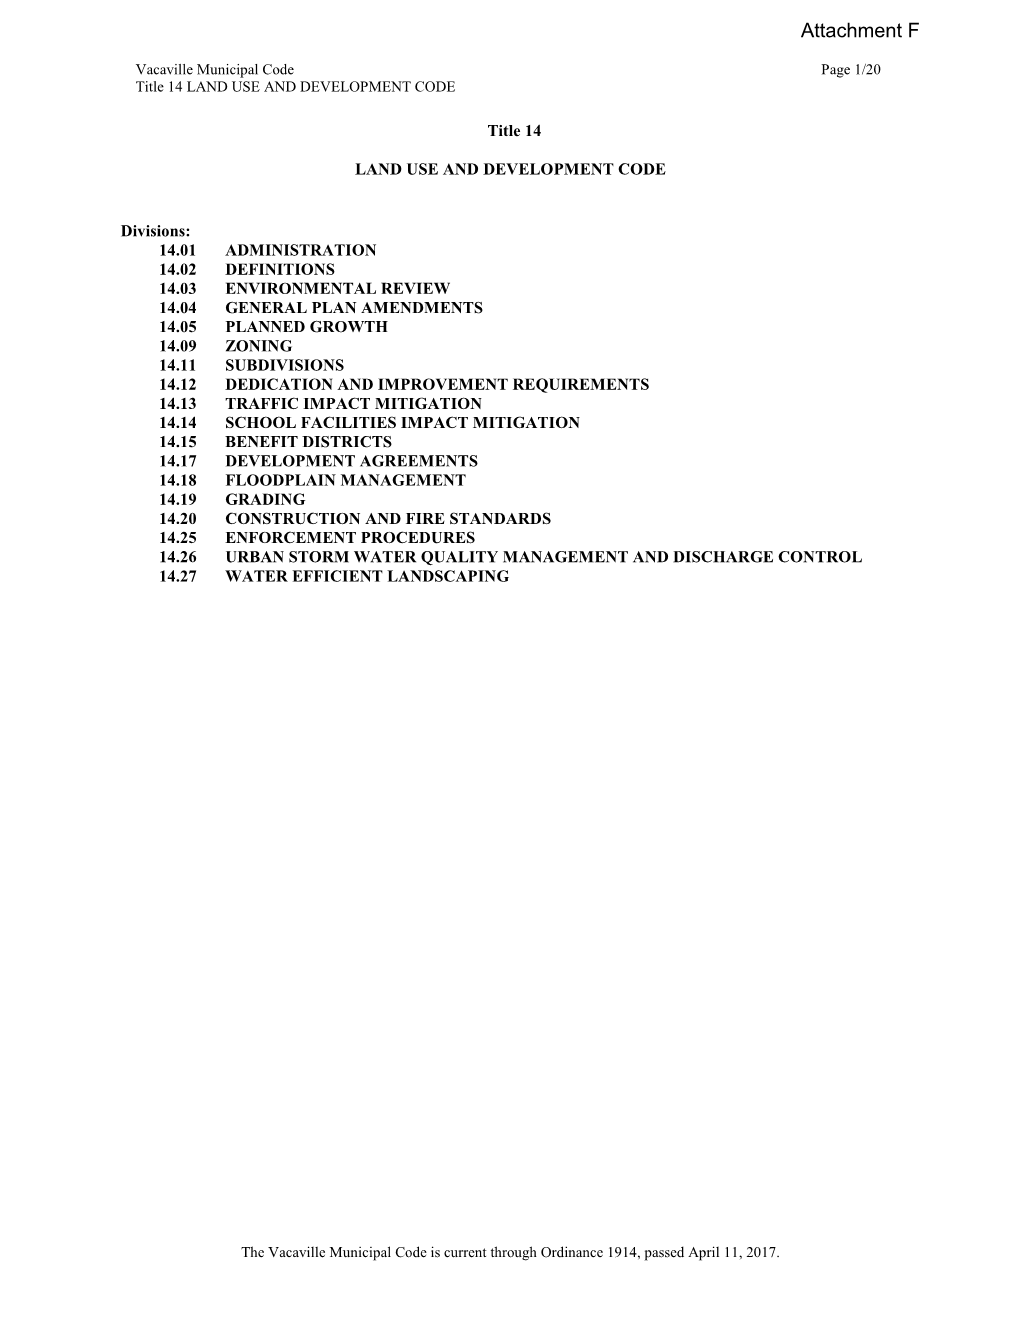 Vacaville Municipal Code Page 1/20 Title 14 LAND USE and DEVELOPMENT CODE